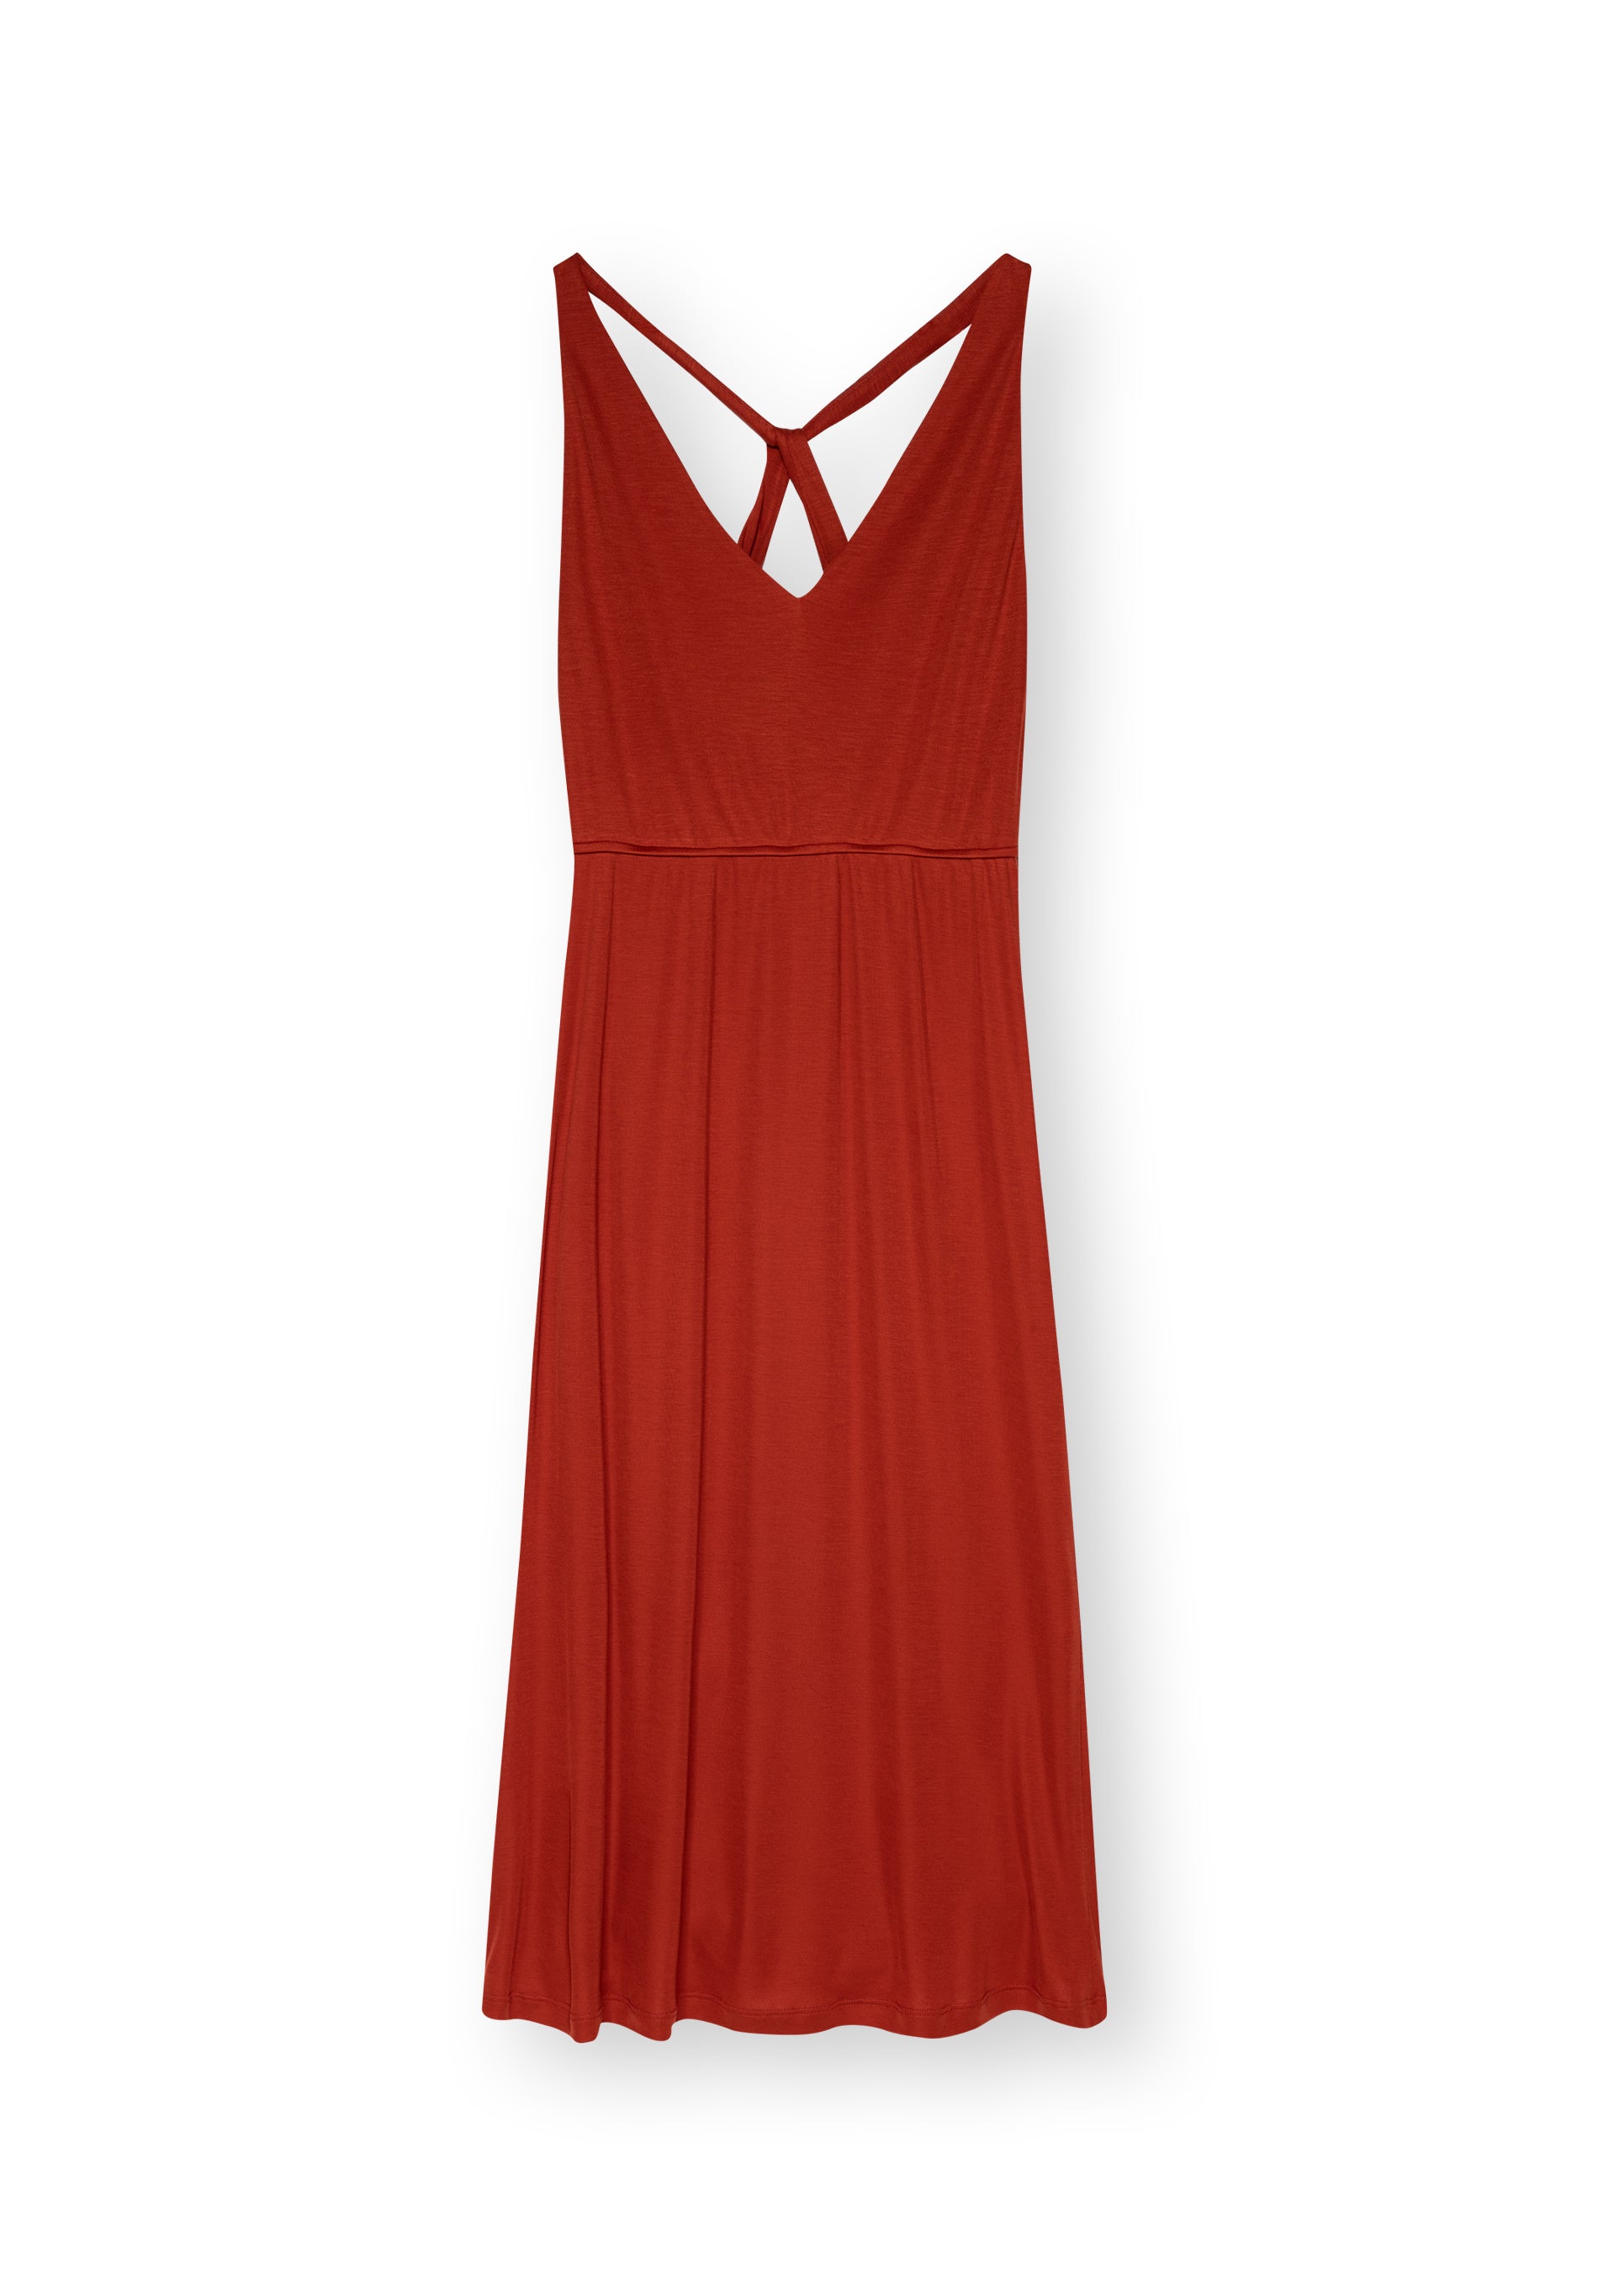 Maxi dress RITIANA in light red by LOVJOI made of TENCEL™ (ST)